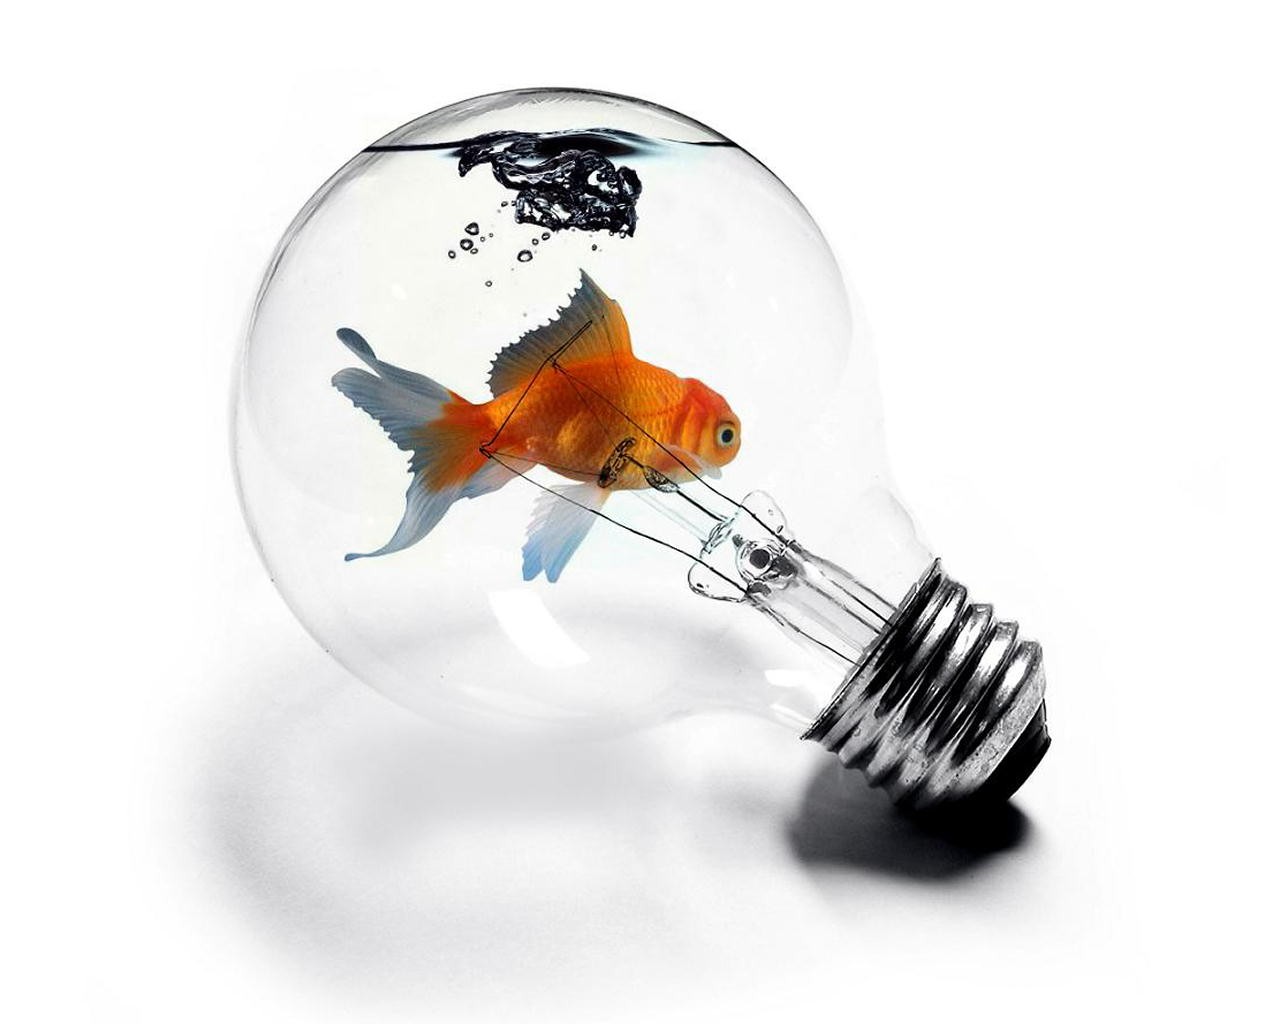 General 1280x1024 goldfish light bulb digital art technology simple background animals fish white background